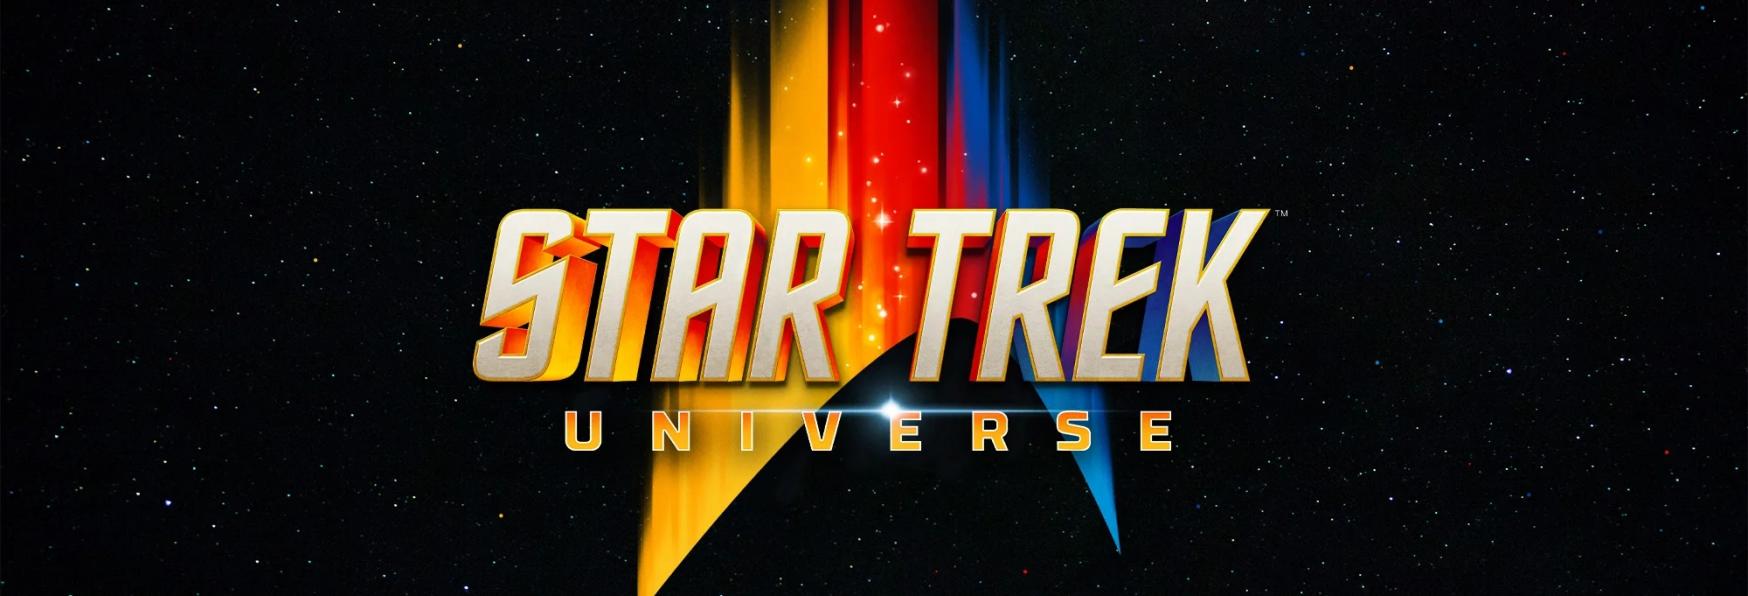 More Star Trek TV Series Coming Soon: Alex Kurtzman Says, "We have several Plans in mind"